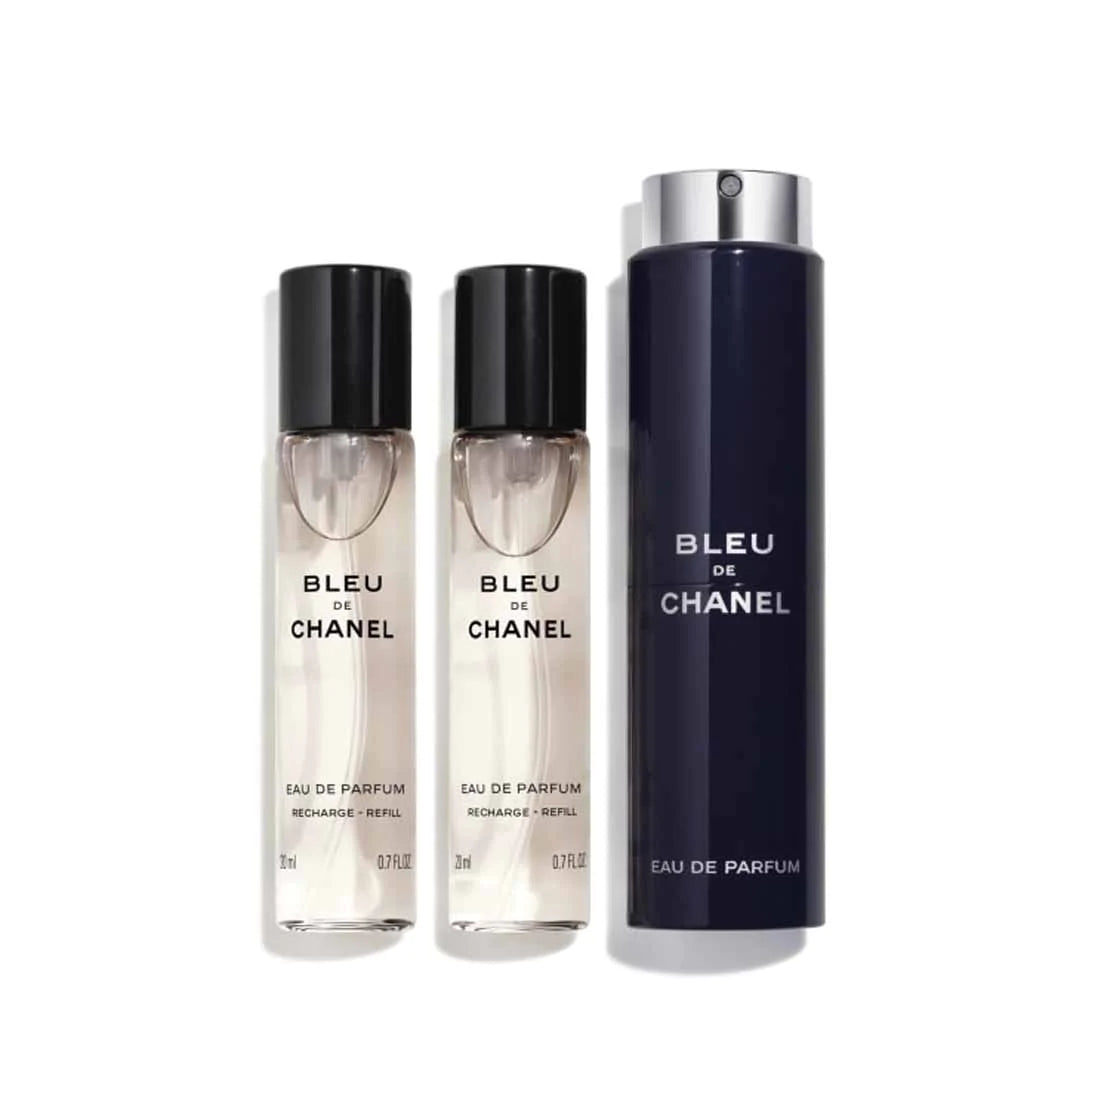 Chanel Bleu De Chanel Eau de Parfum Twist and Spray 20ml x 3